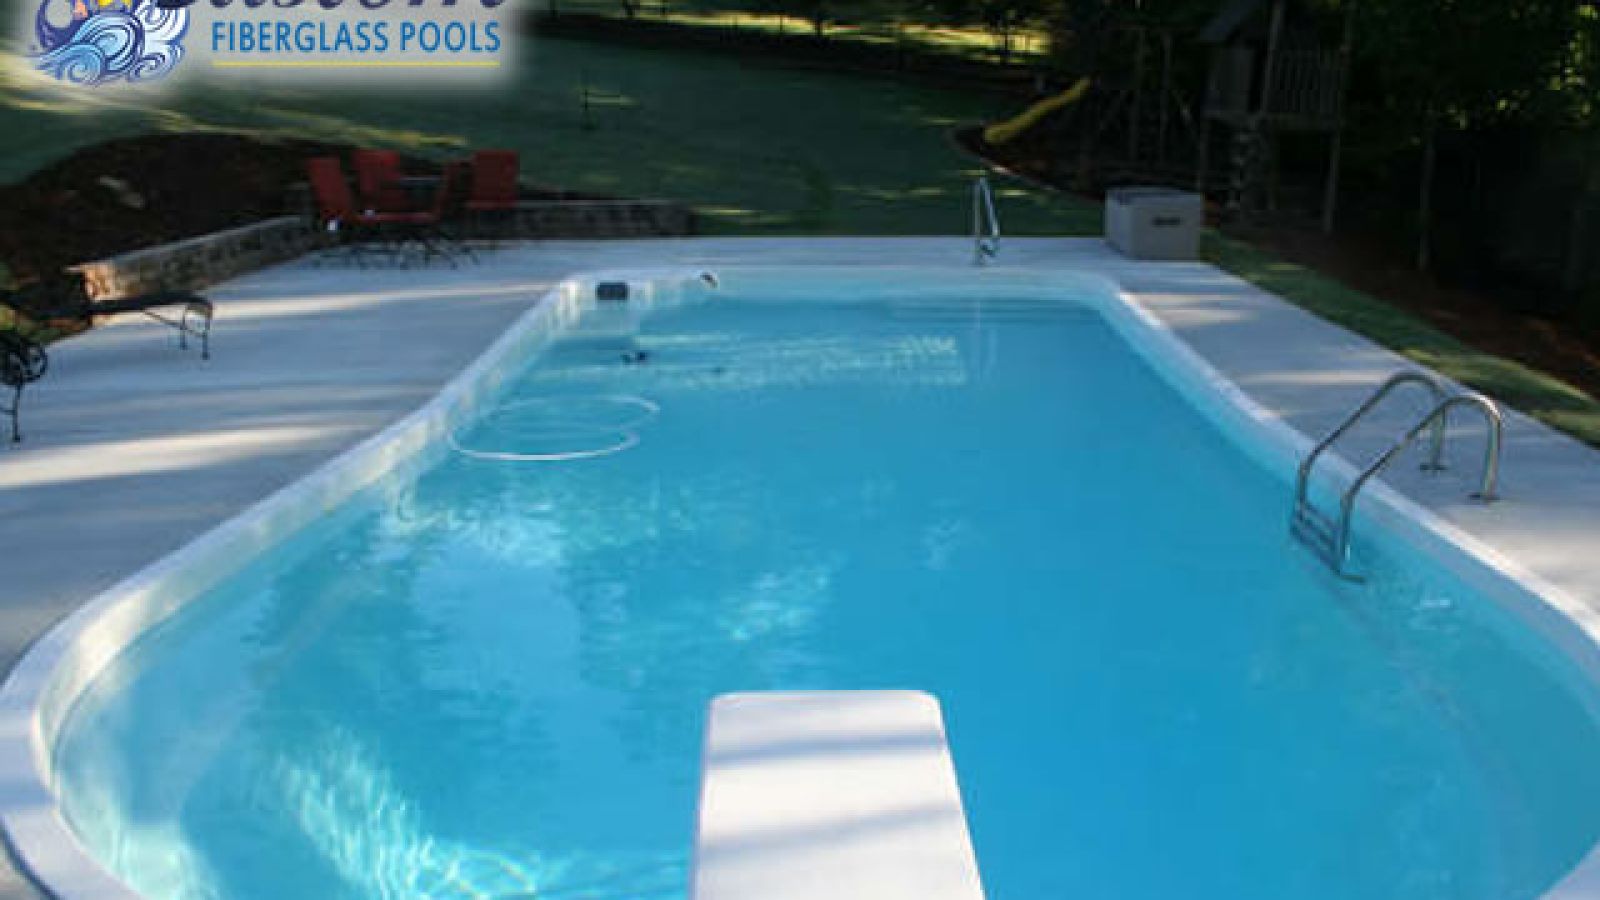 Caribbean Deep Fiberglass Pool, a luxurious and spacious addition to a Clarksville, TN backyard